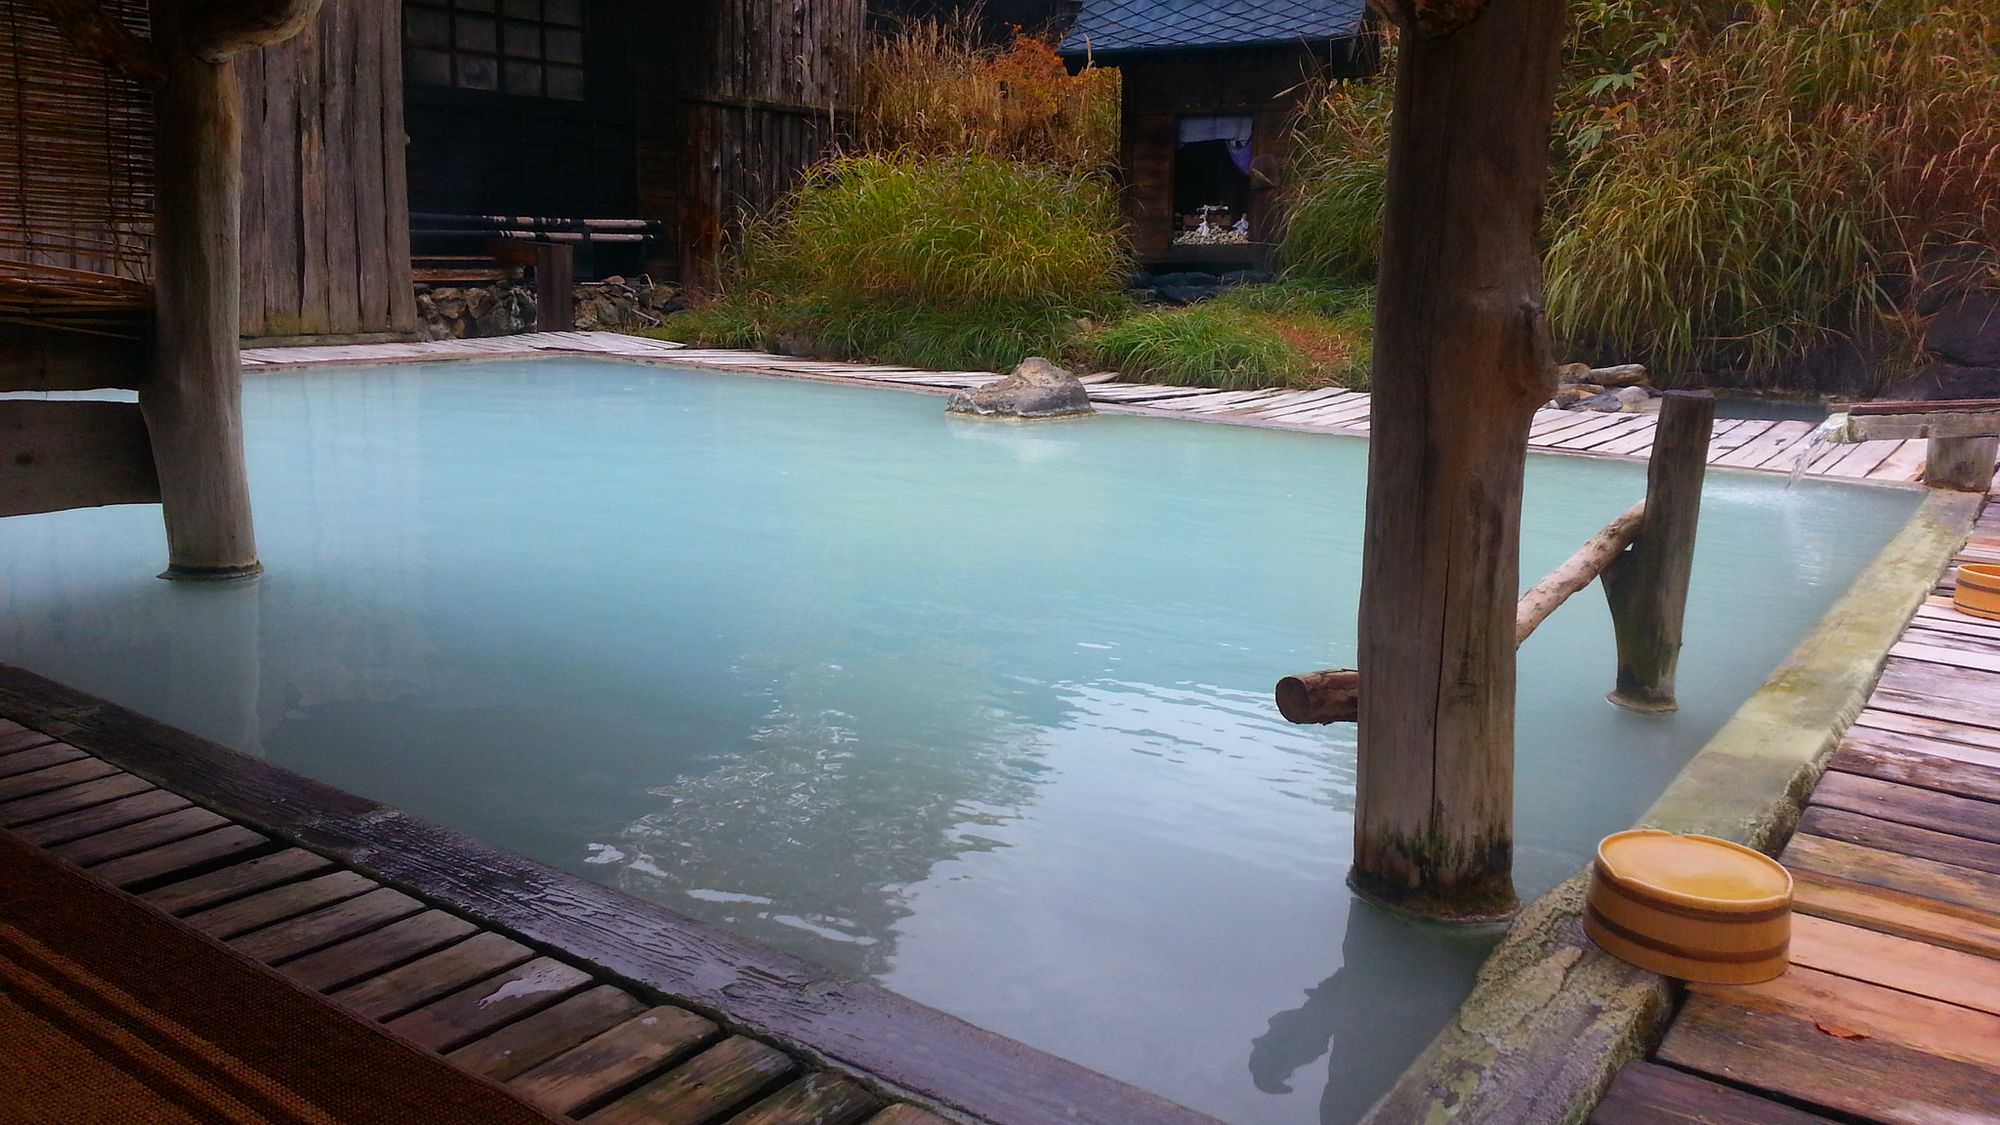 A peek into Japan’s Hot Springs